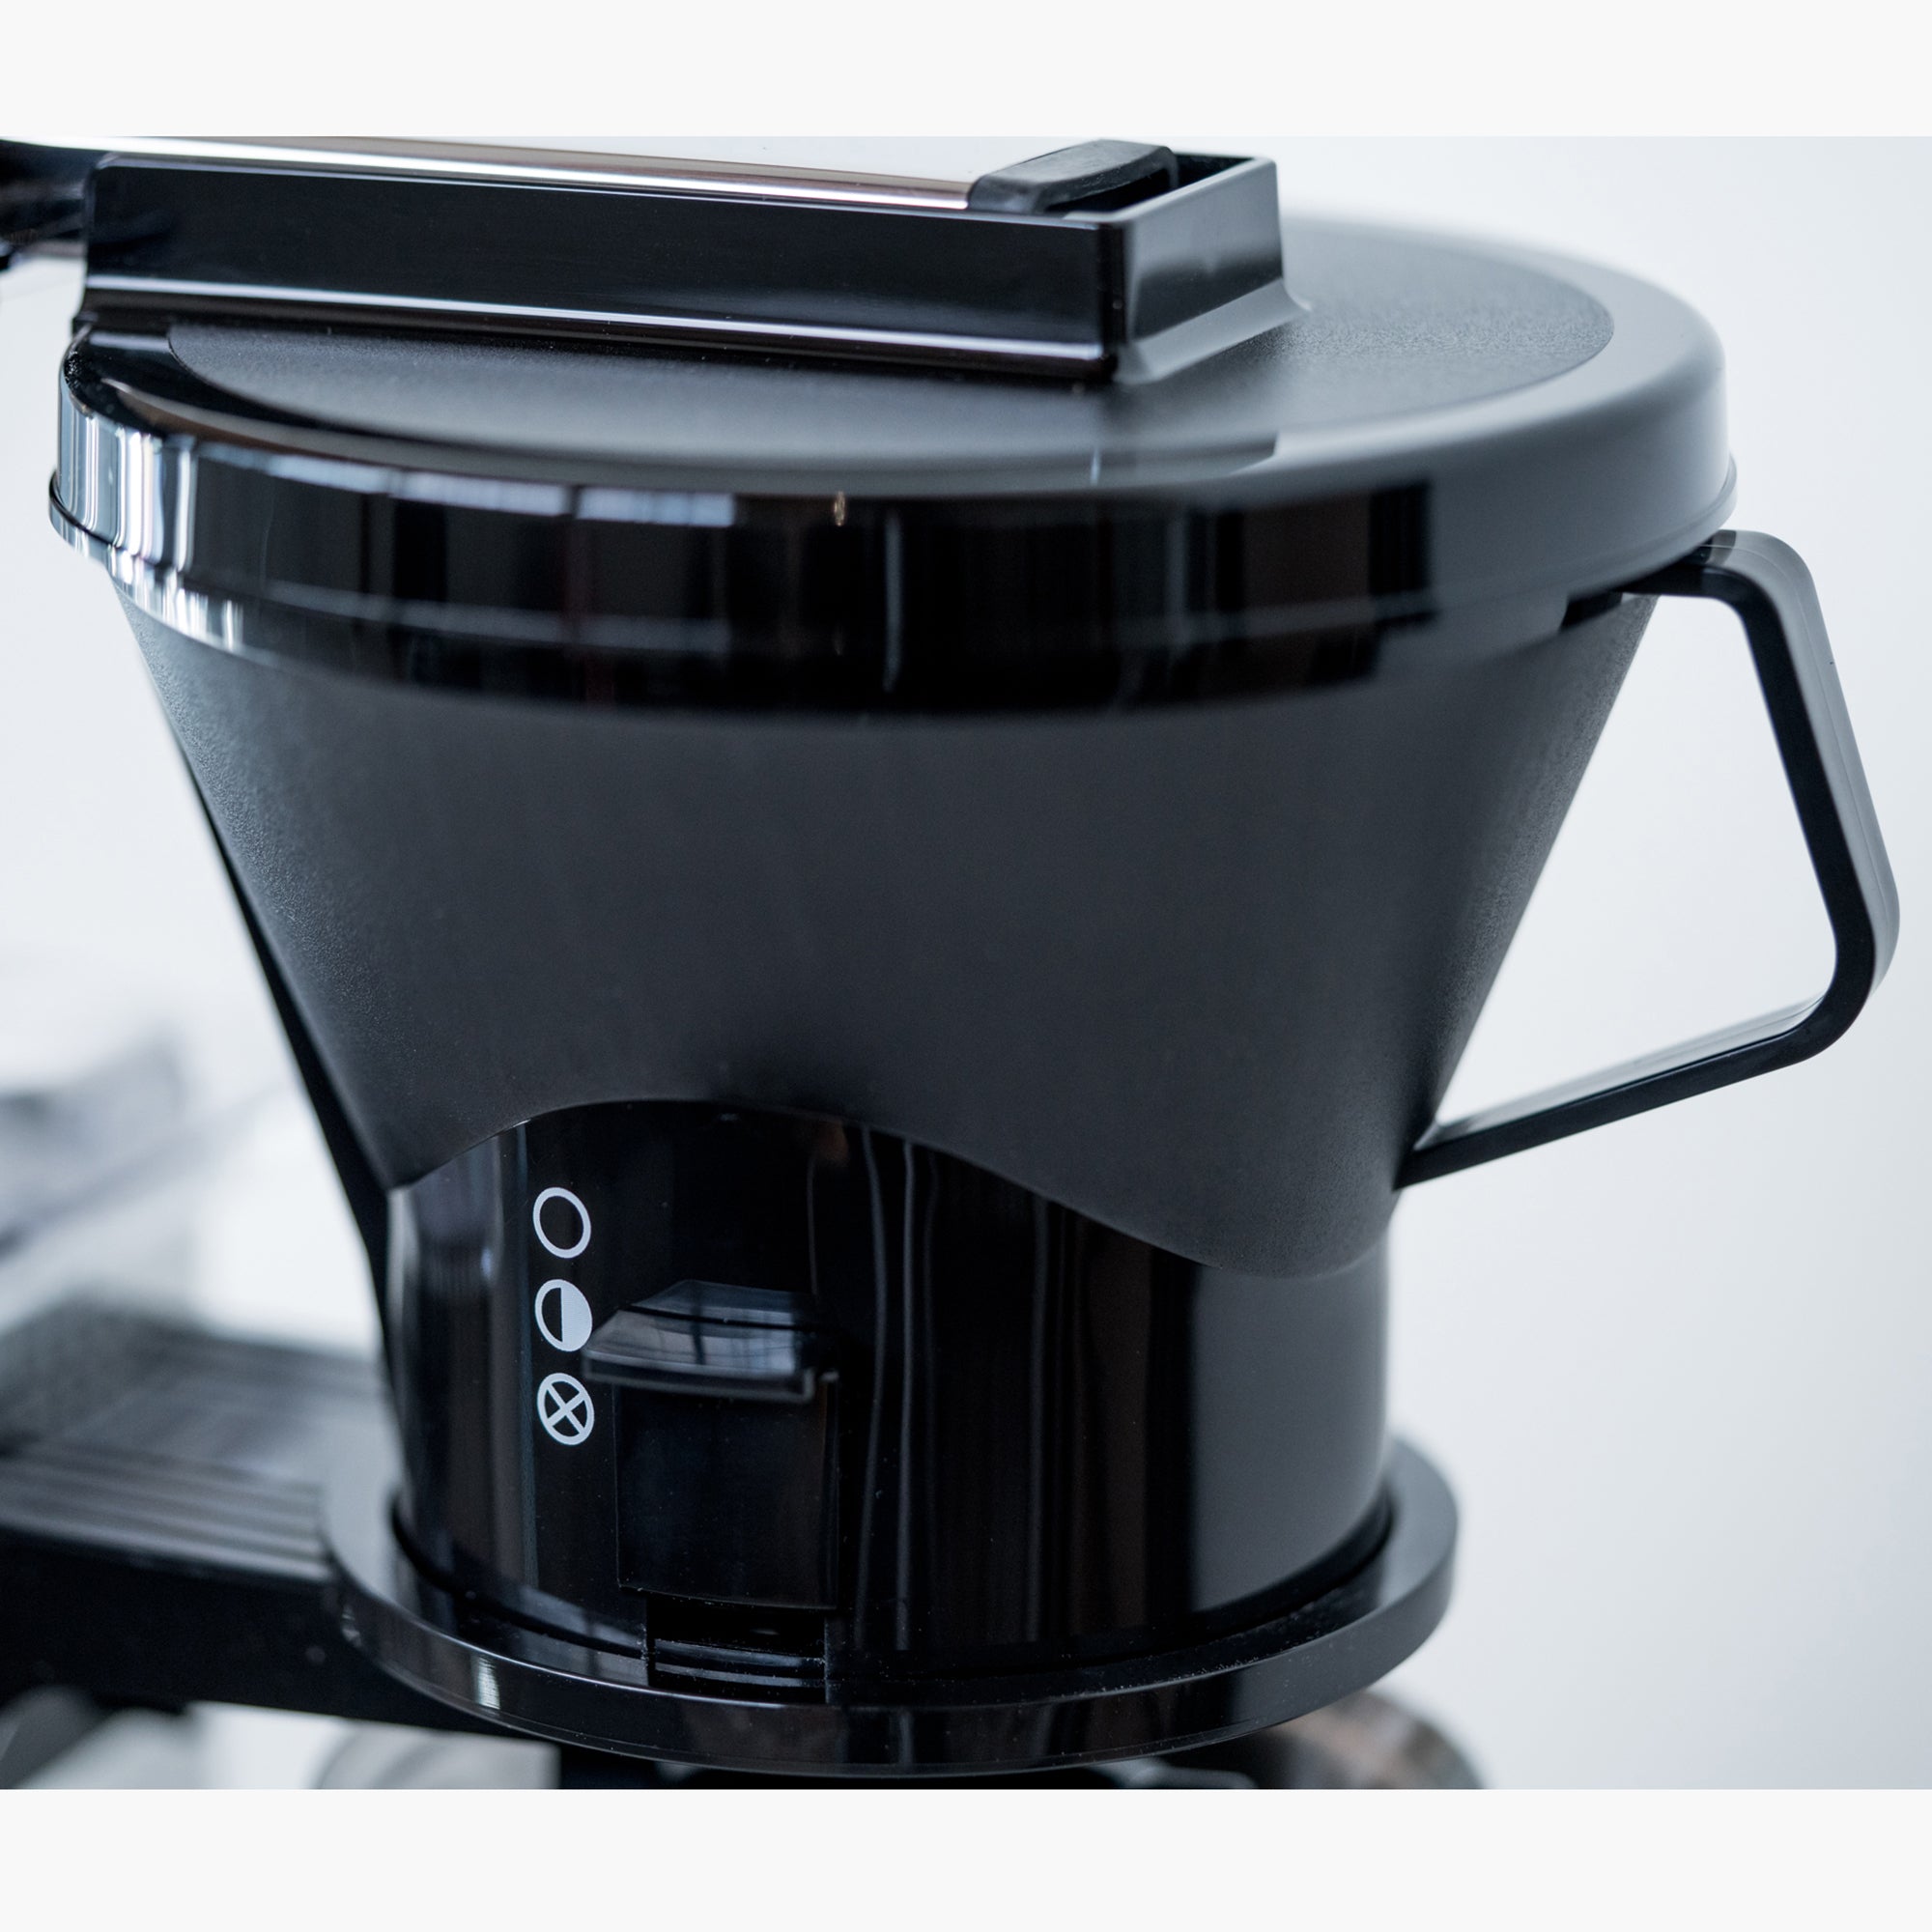 Manual-Adjust Drip-Stop Coffee Maker: Shop Moccamaster KBTS Brewer